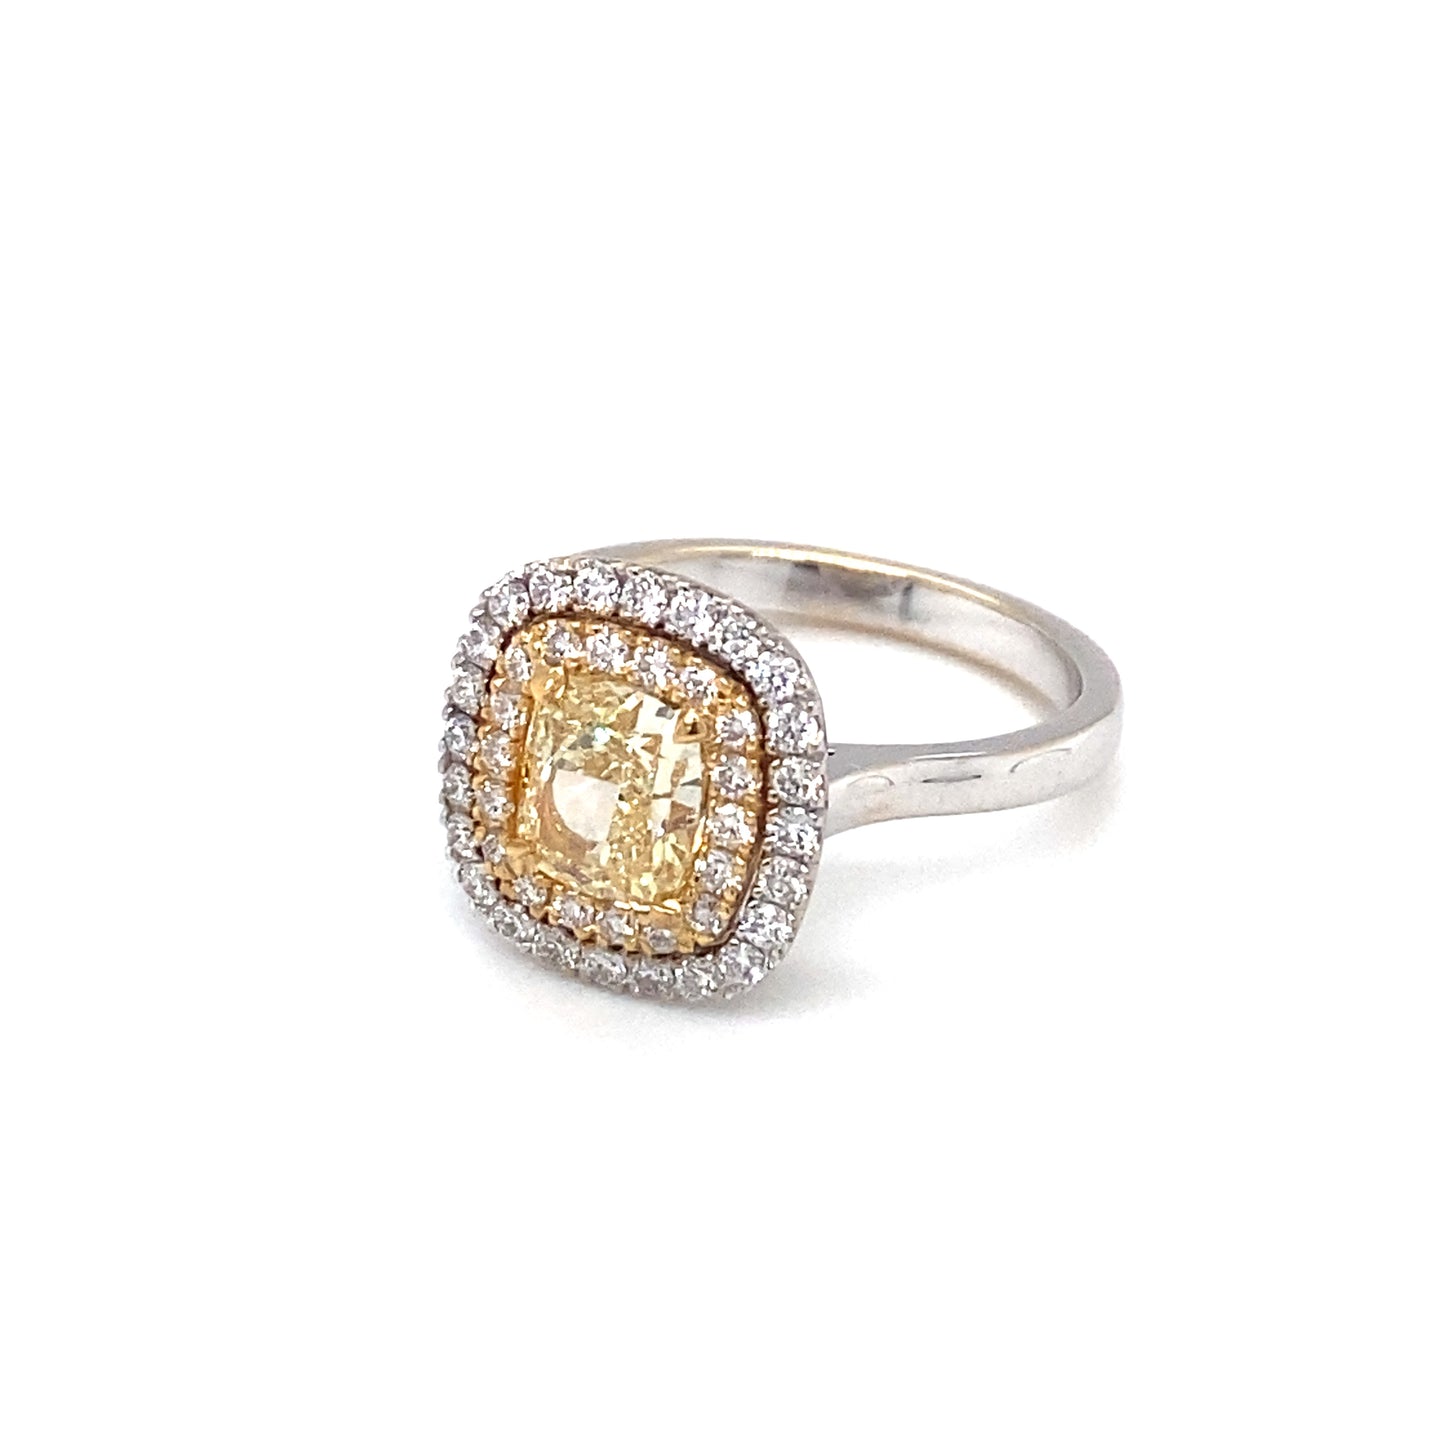 GIA Certified 1.56 Carat Fancy Light Yellow Diamond Ring in 18K White Gold